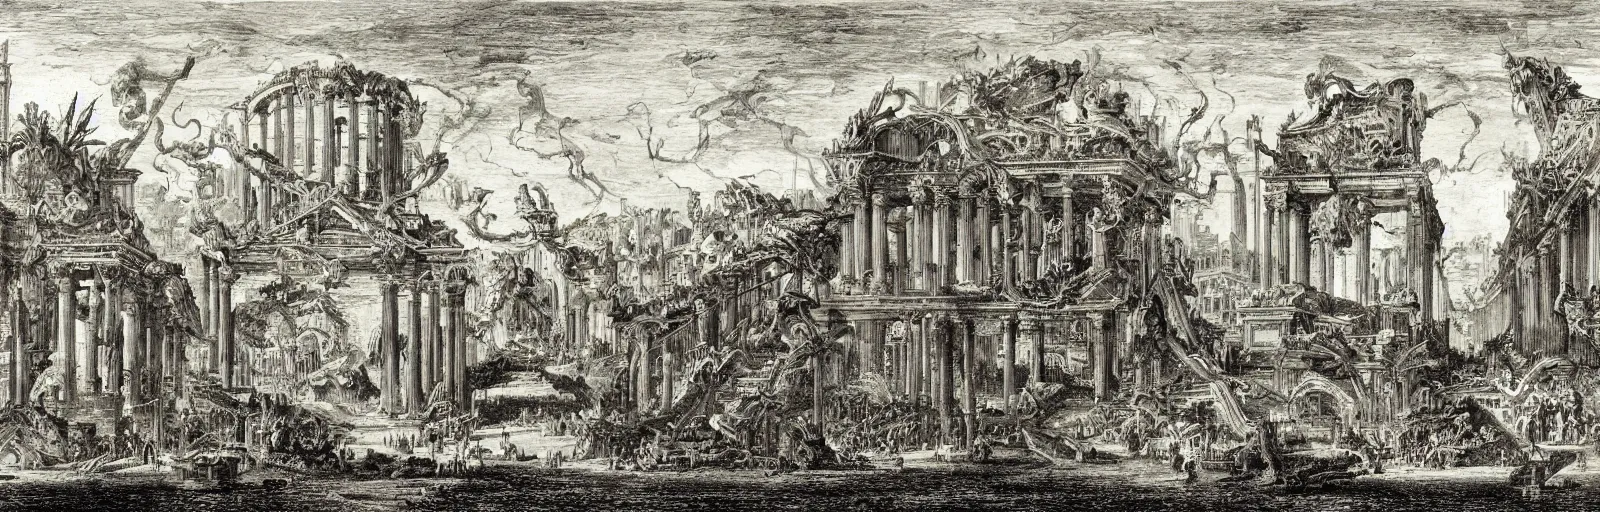 Prompt: a imaginative and theatrical architectural landscape, etching by giovanni battista piranesi